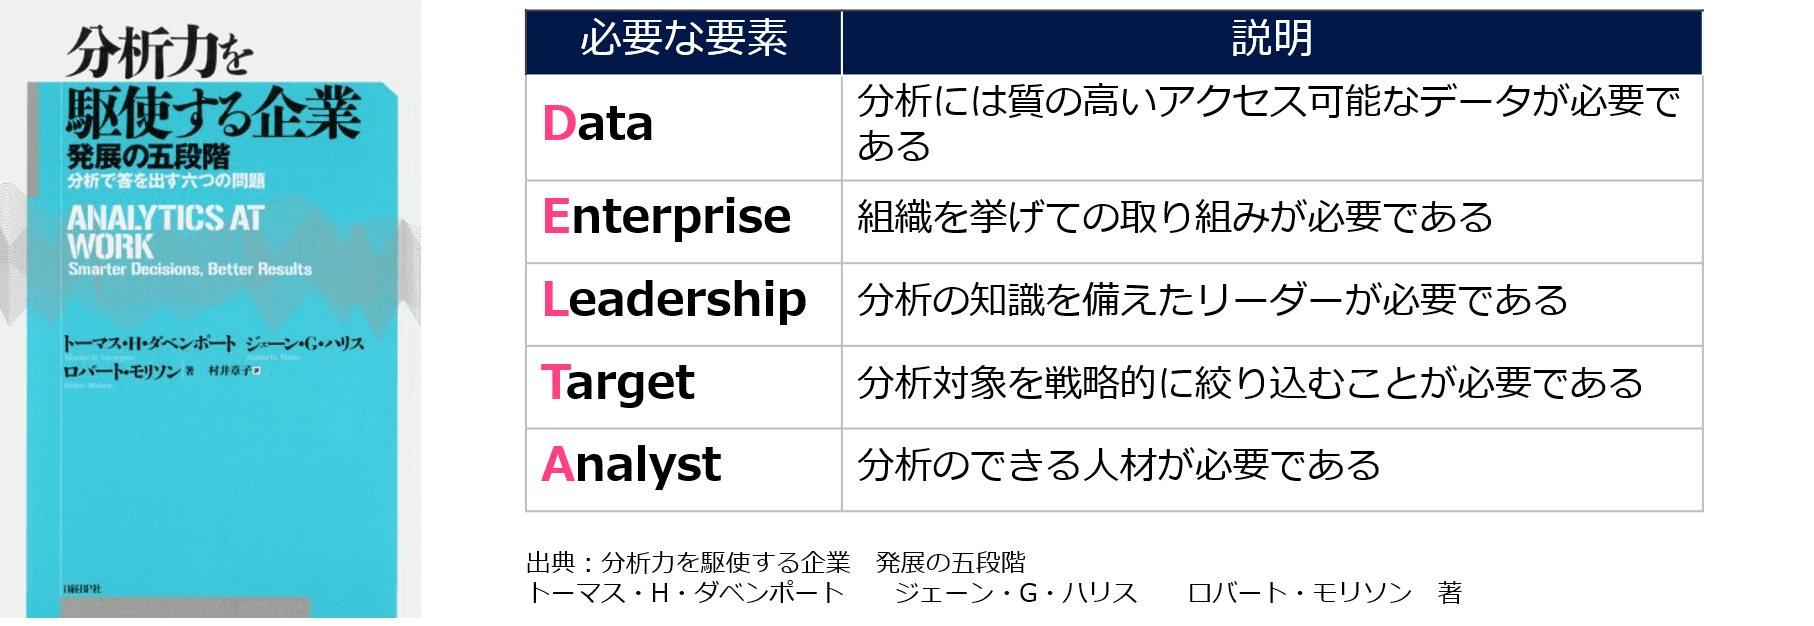 https://isid-ai.jp/assets/images/column/column11/figure1.png